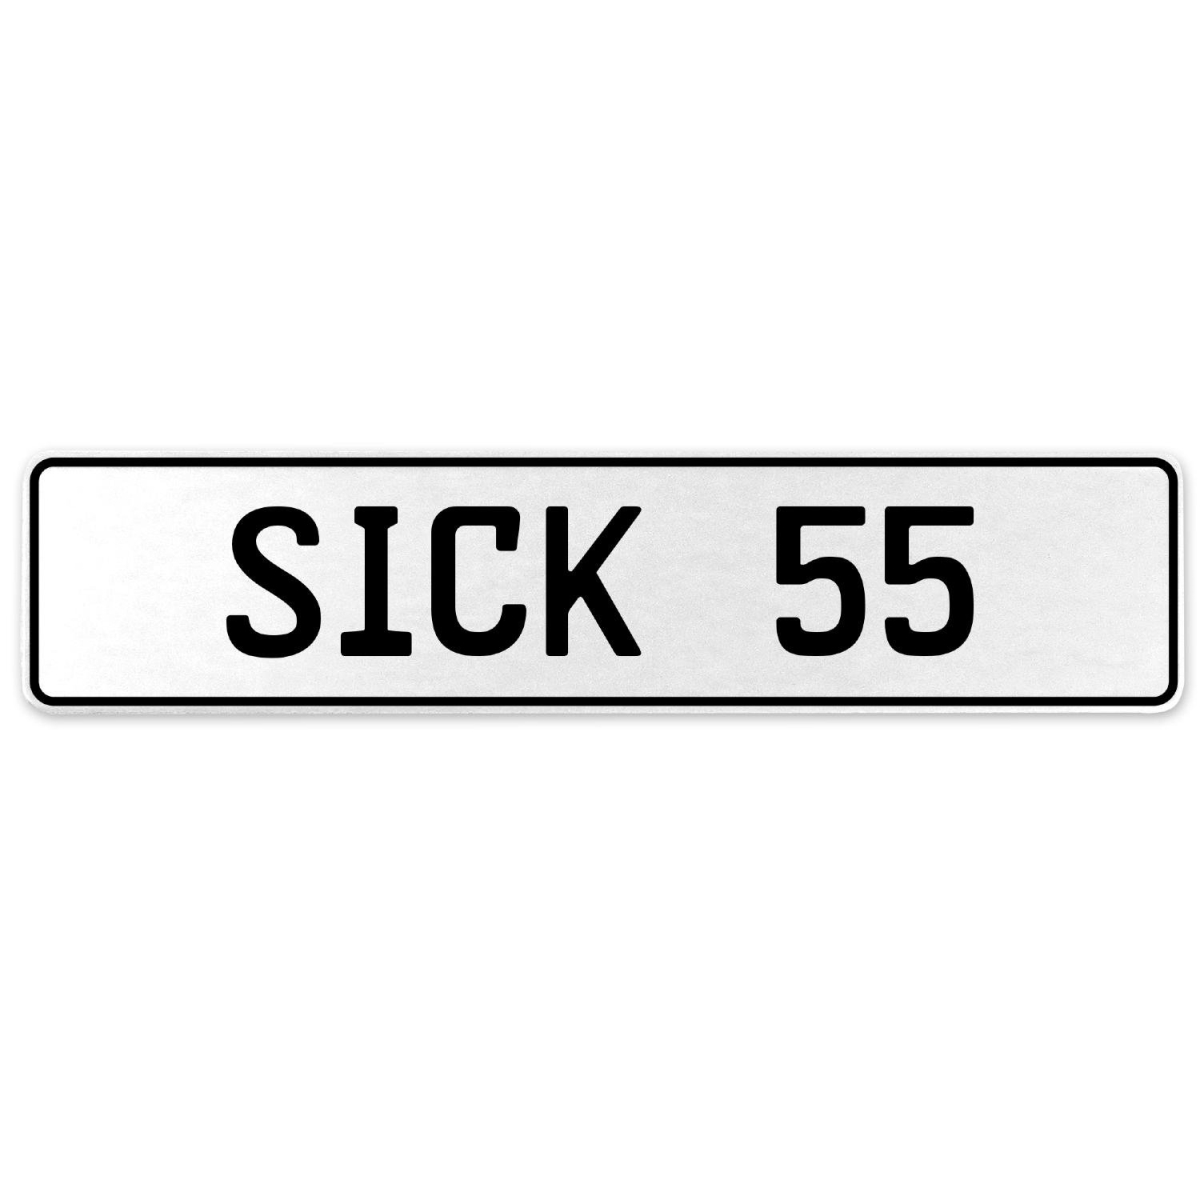 554355 Sick 55 - White Aluminum Street Sign Mancave Euro Plate Name Door Sign Wall